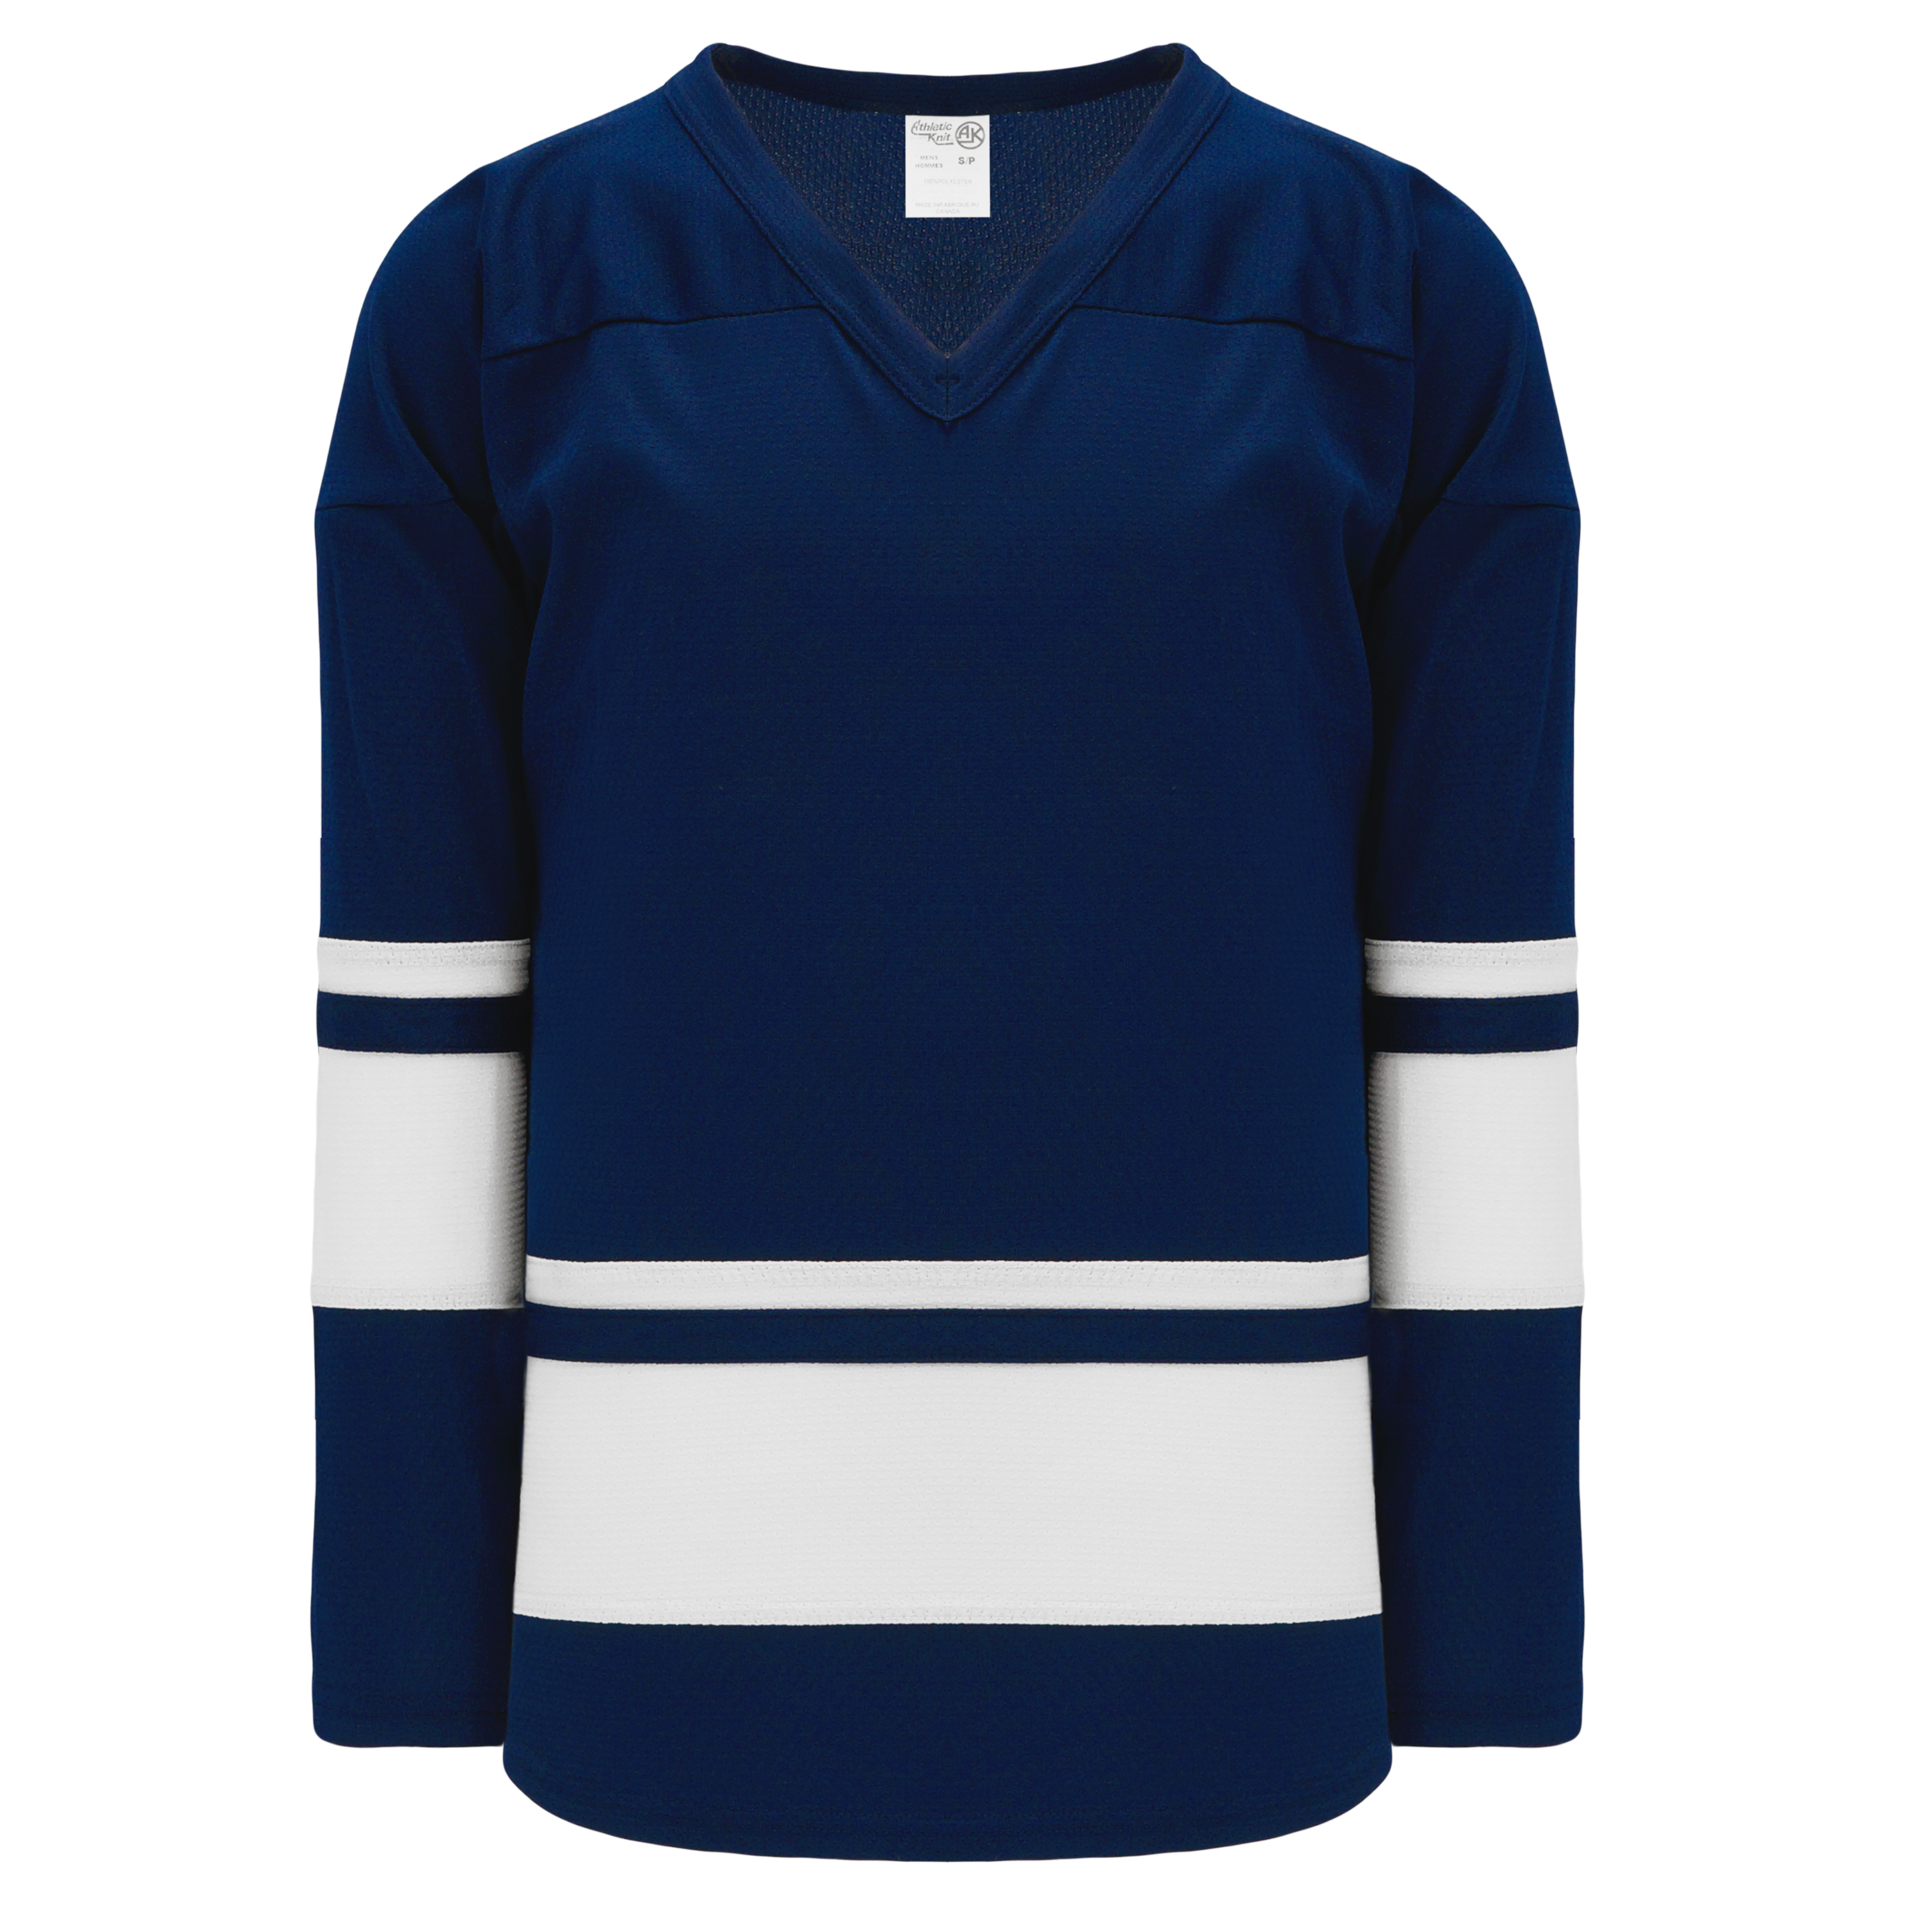 H6100-289 Pro Blue/White Practice Style Blank Hockey Jerseys Adult Medium